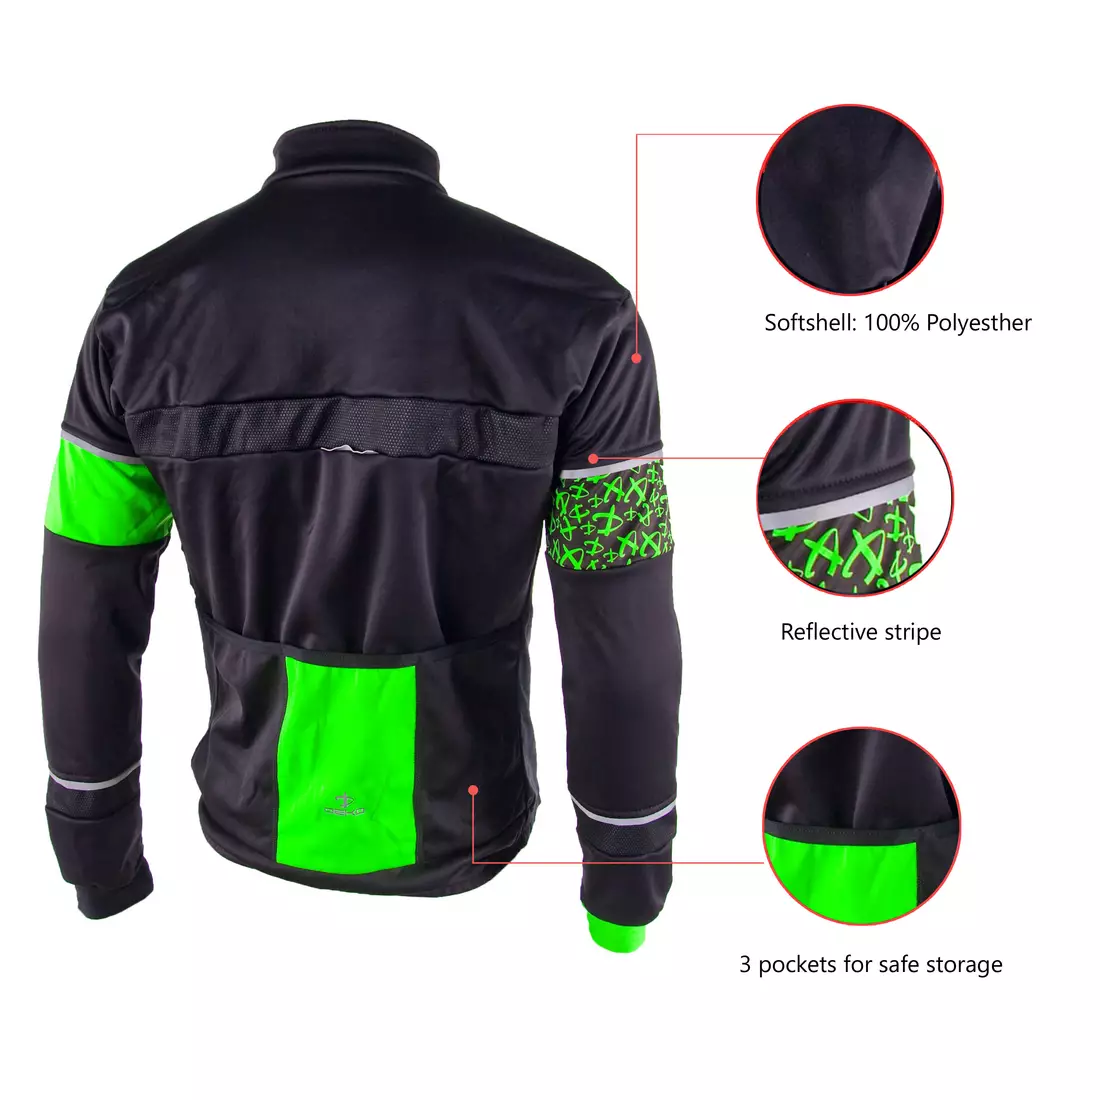 Cyklistická softshellová bunda DEKO KOLUN černo-fluor zelená